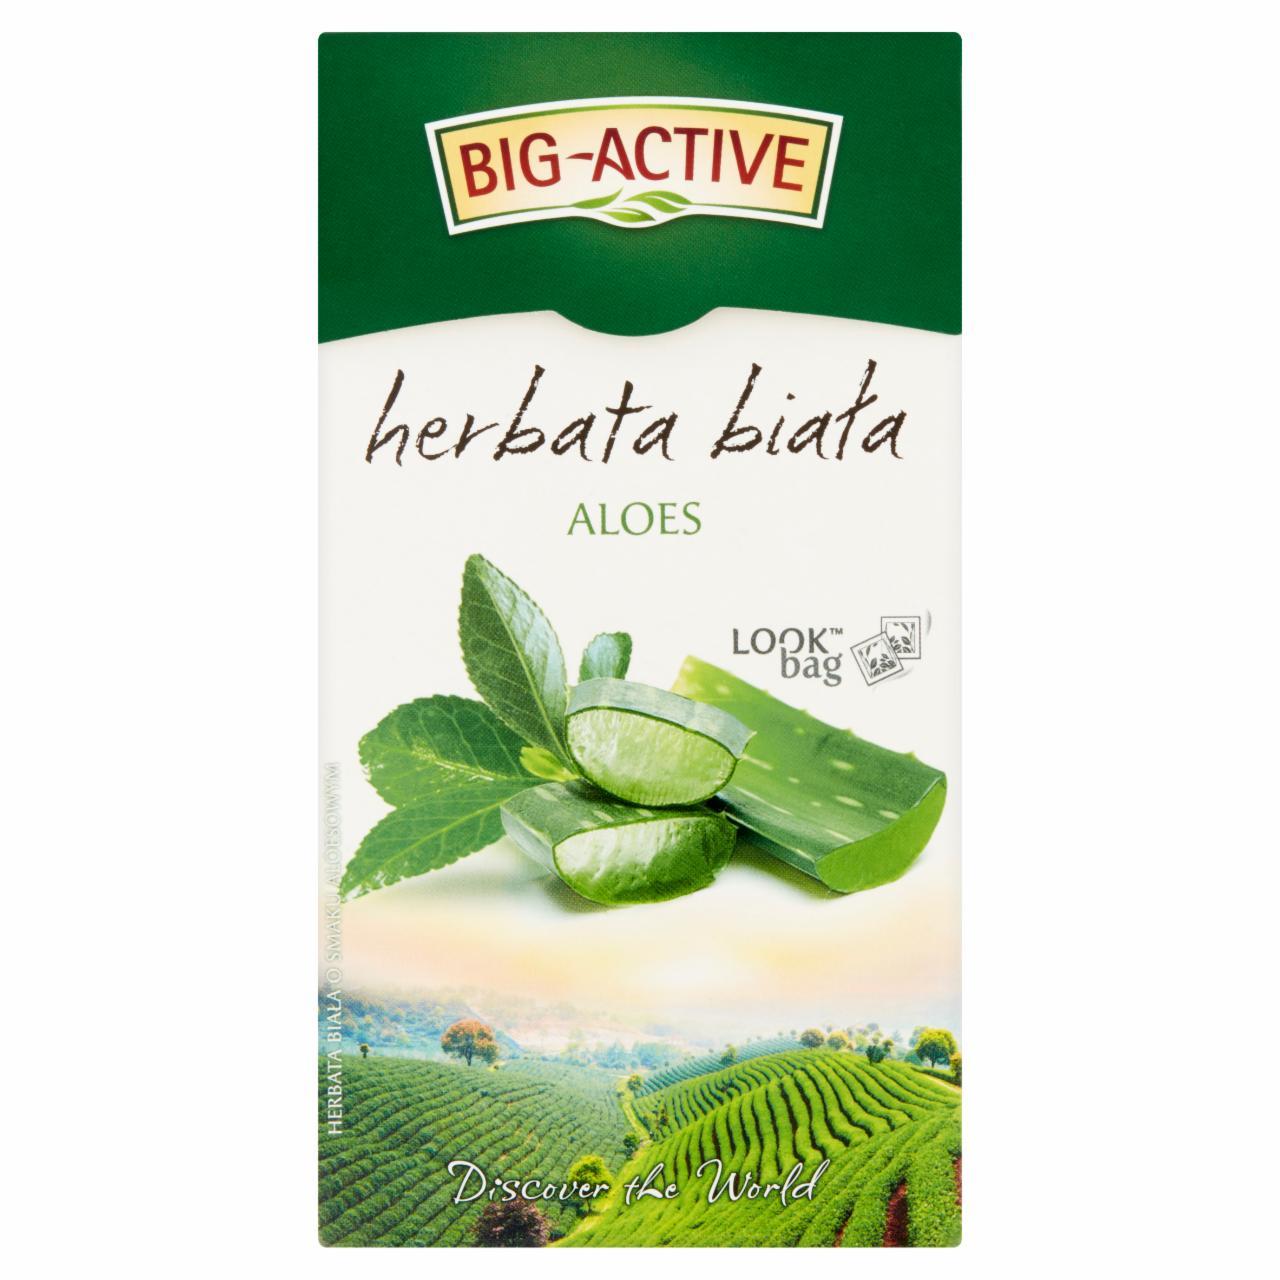 Zdjęcia - Big-Active Herbata biała aloes 30 g (20 x 1,5 g)